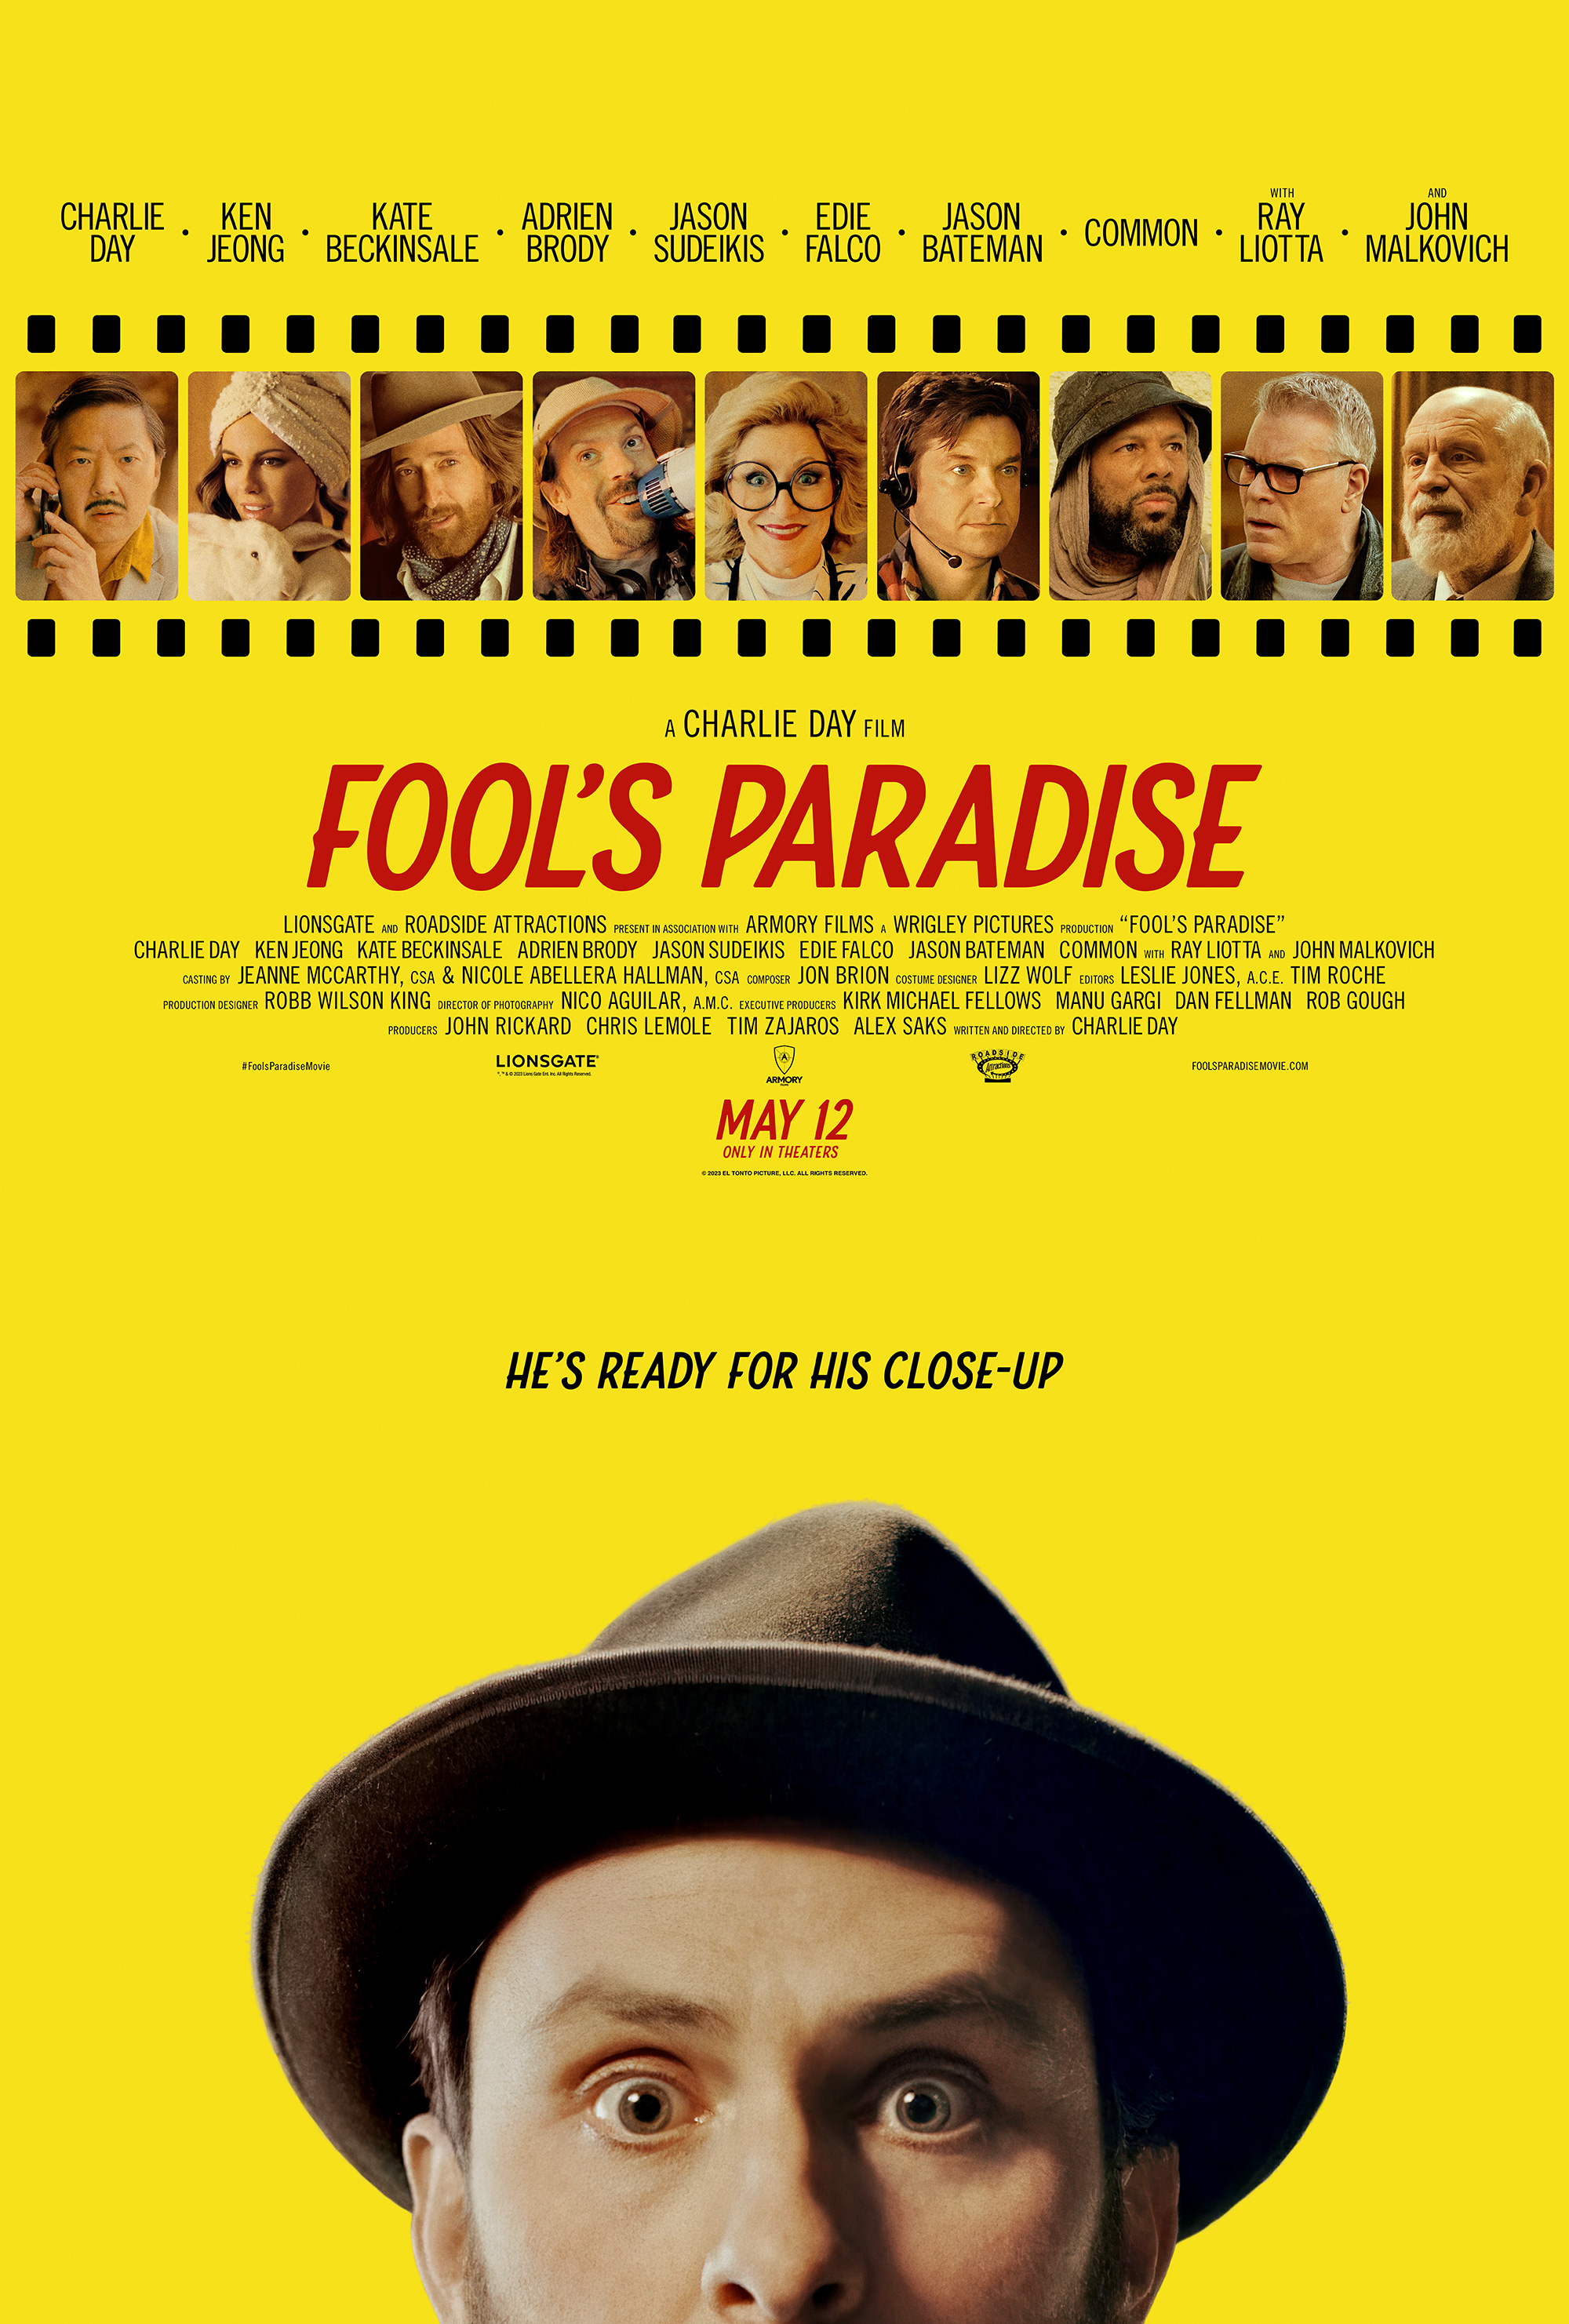 Fool's Paradise at an AMC Theatre near you.